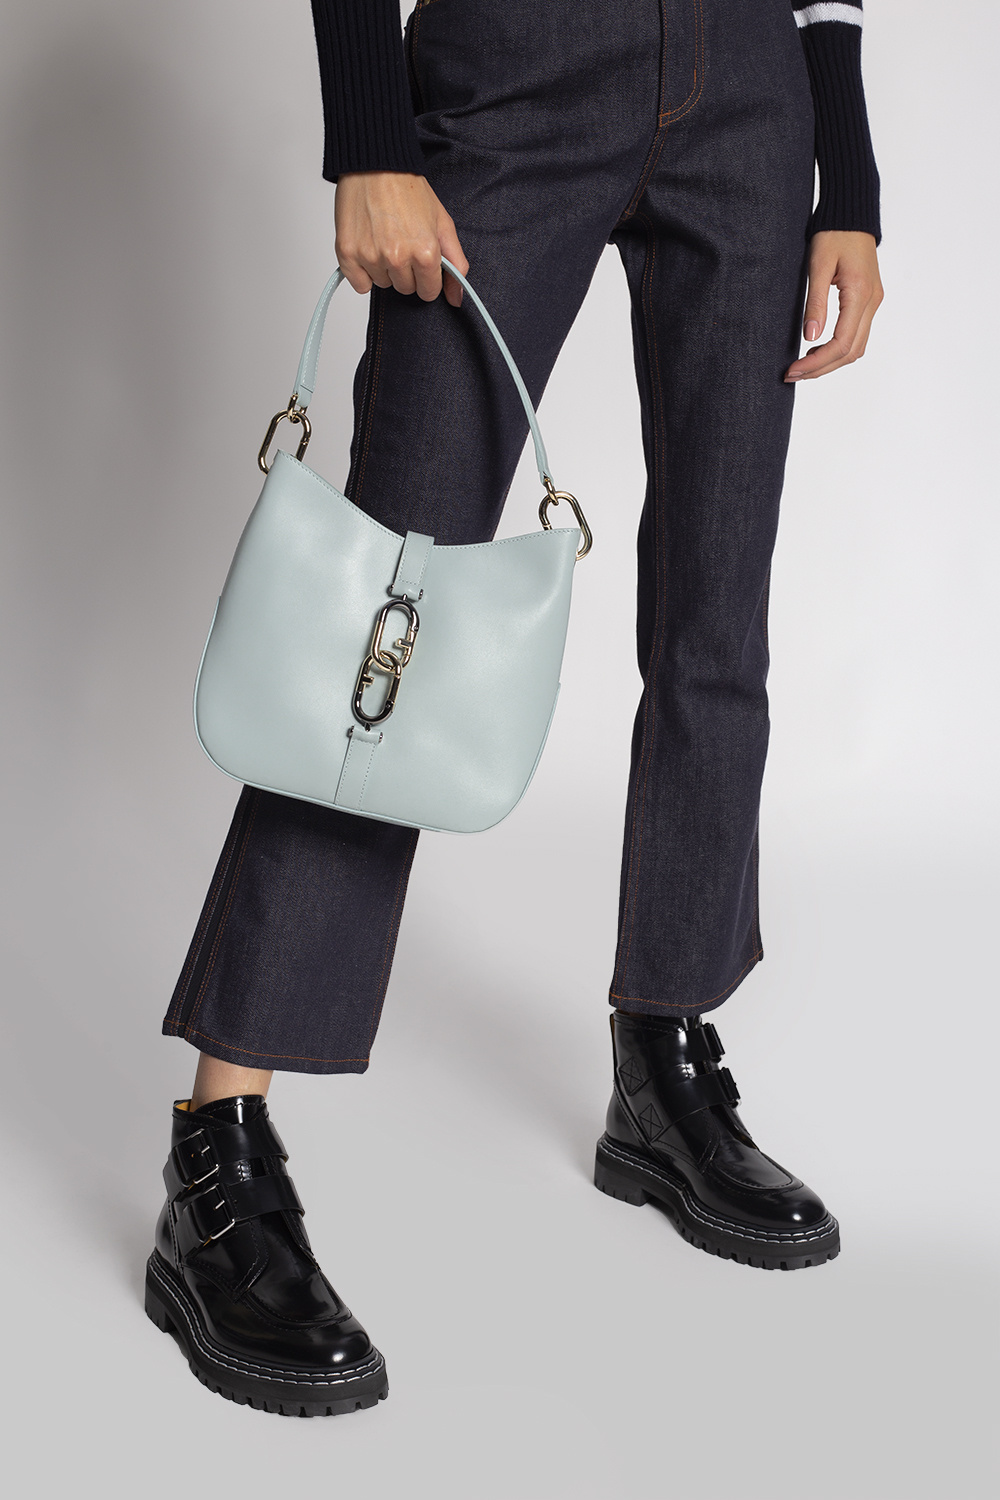 Furla Women's Sirena Leather Handbag